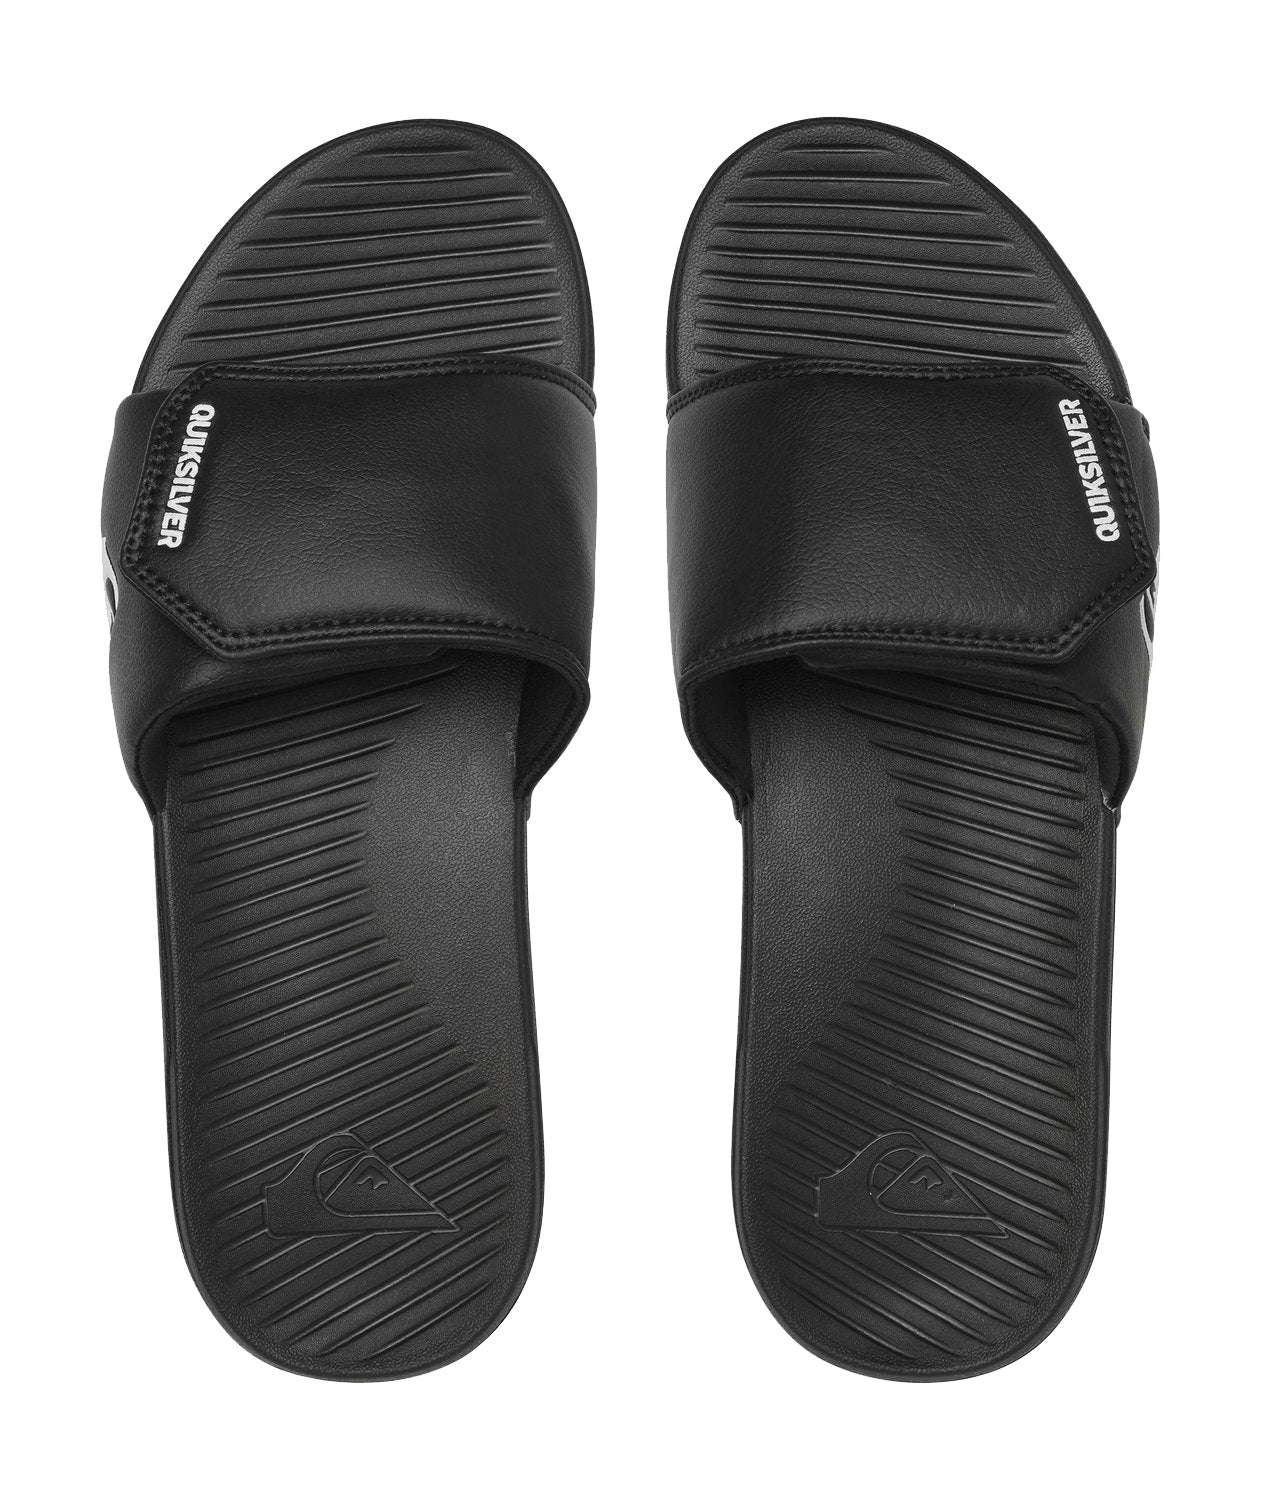 Quiksilver Bright Coast Adjust Mens Sandal XKWK-Black-White-Black 11